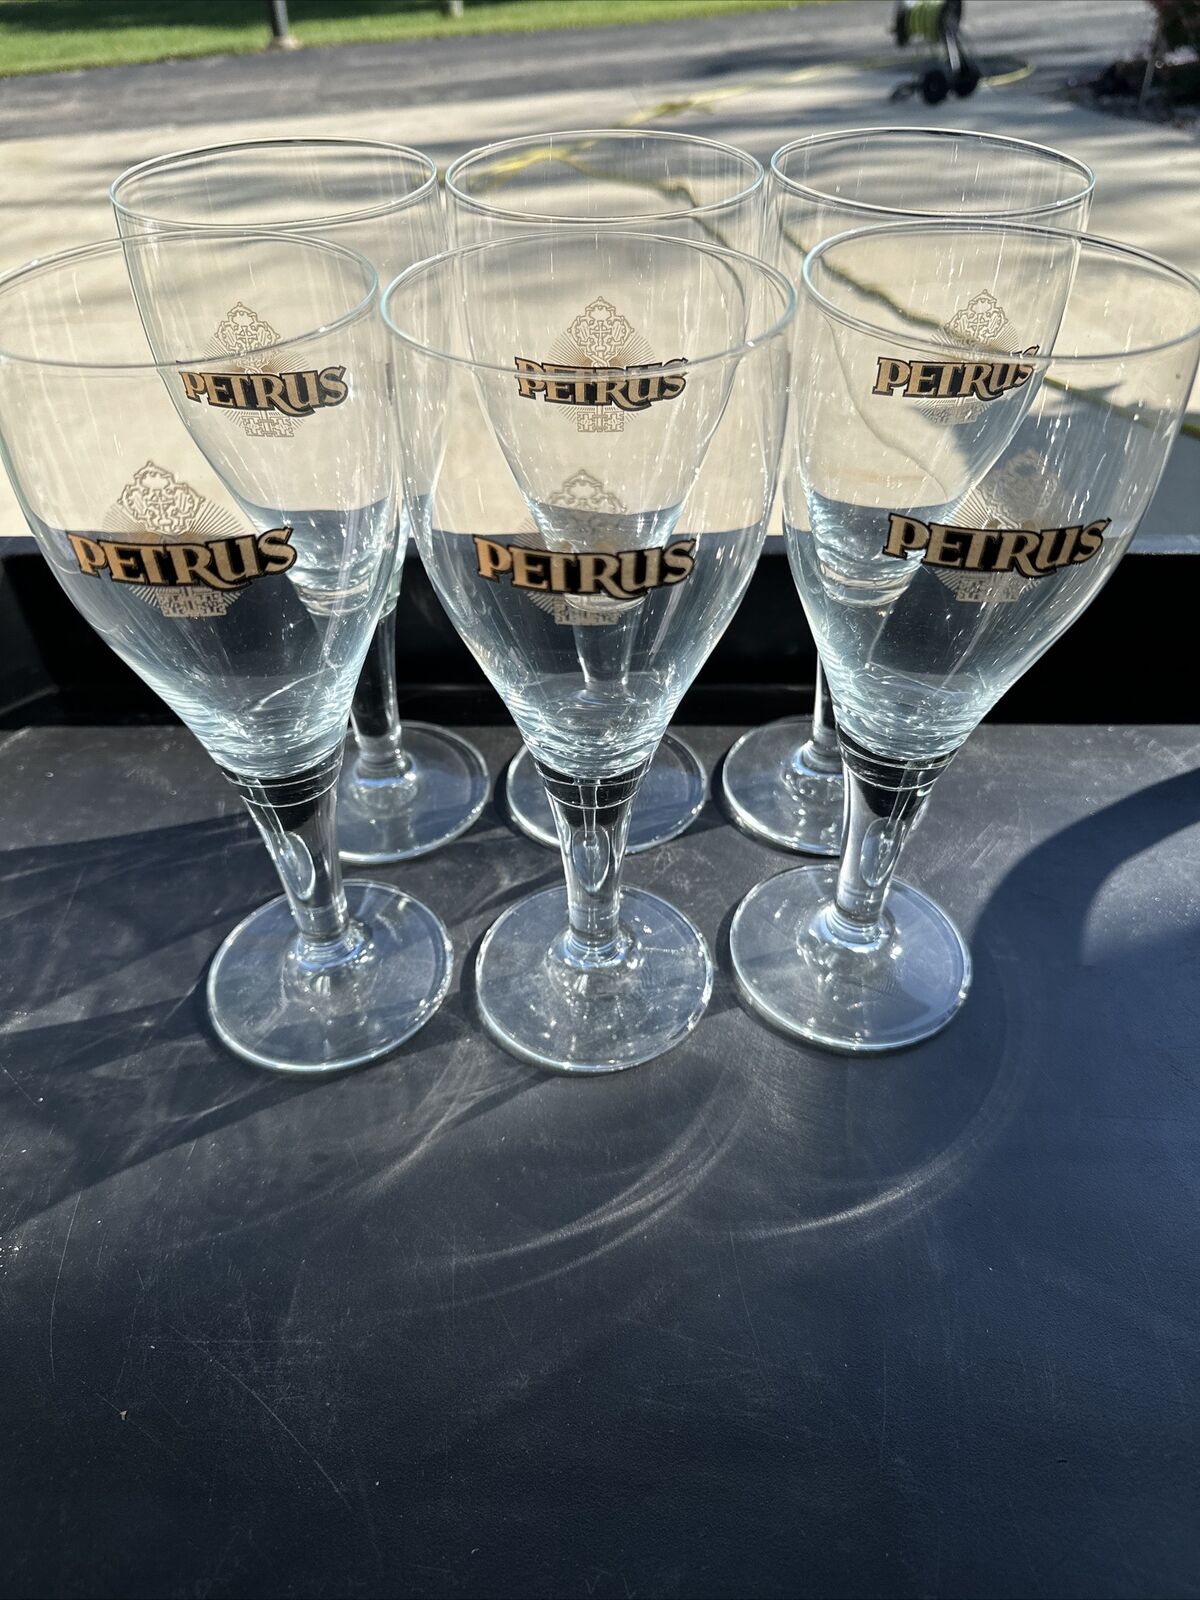 Ritzenhoff Cristal Petrus Belgian Beer Glasses 30cl with Original Box Set of 6